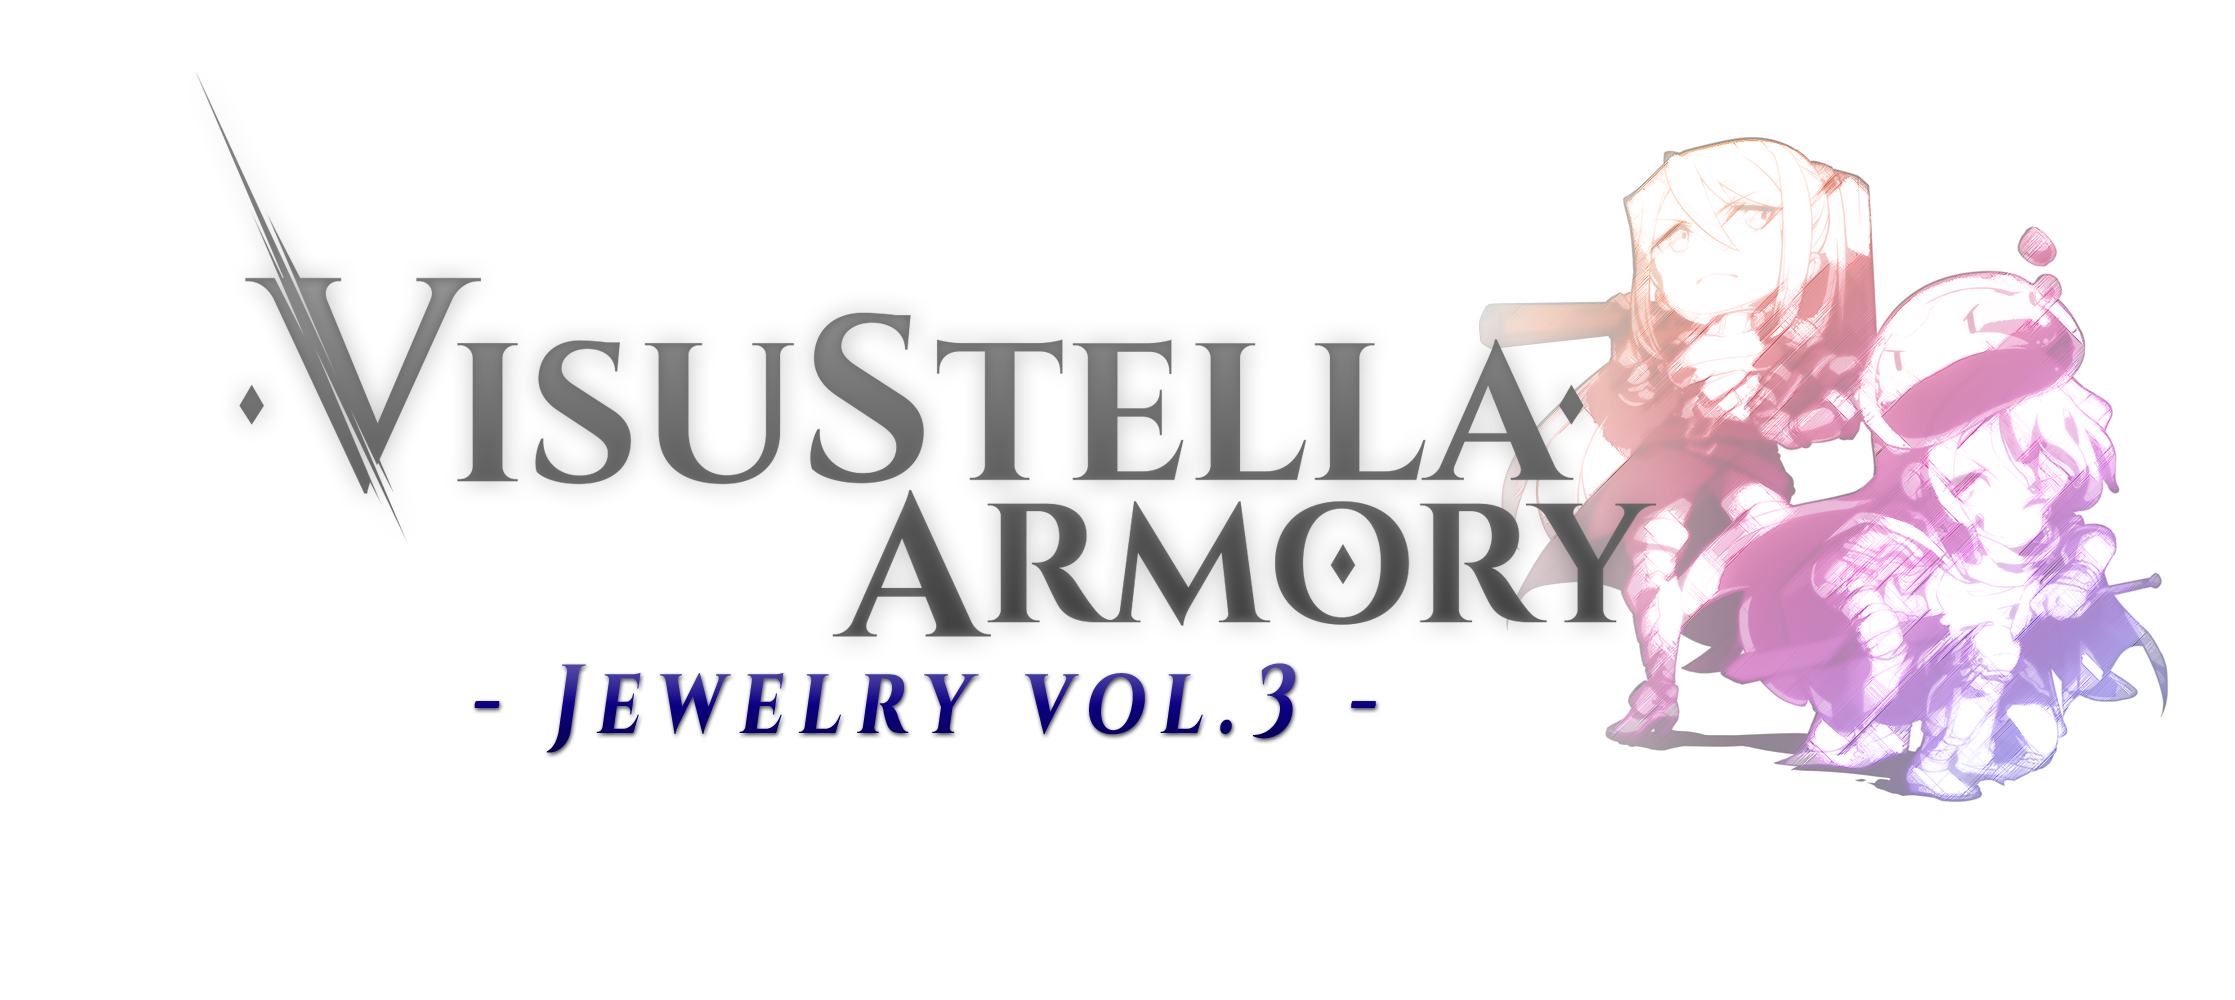 VisuStella Armory: Jewelry Vol.03